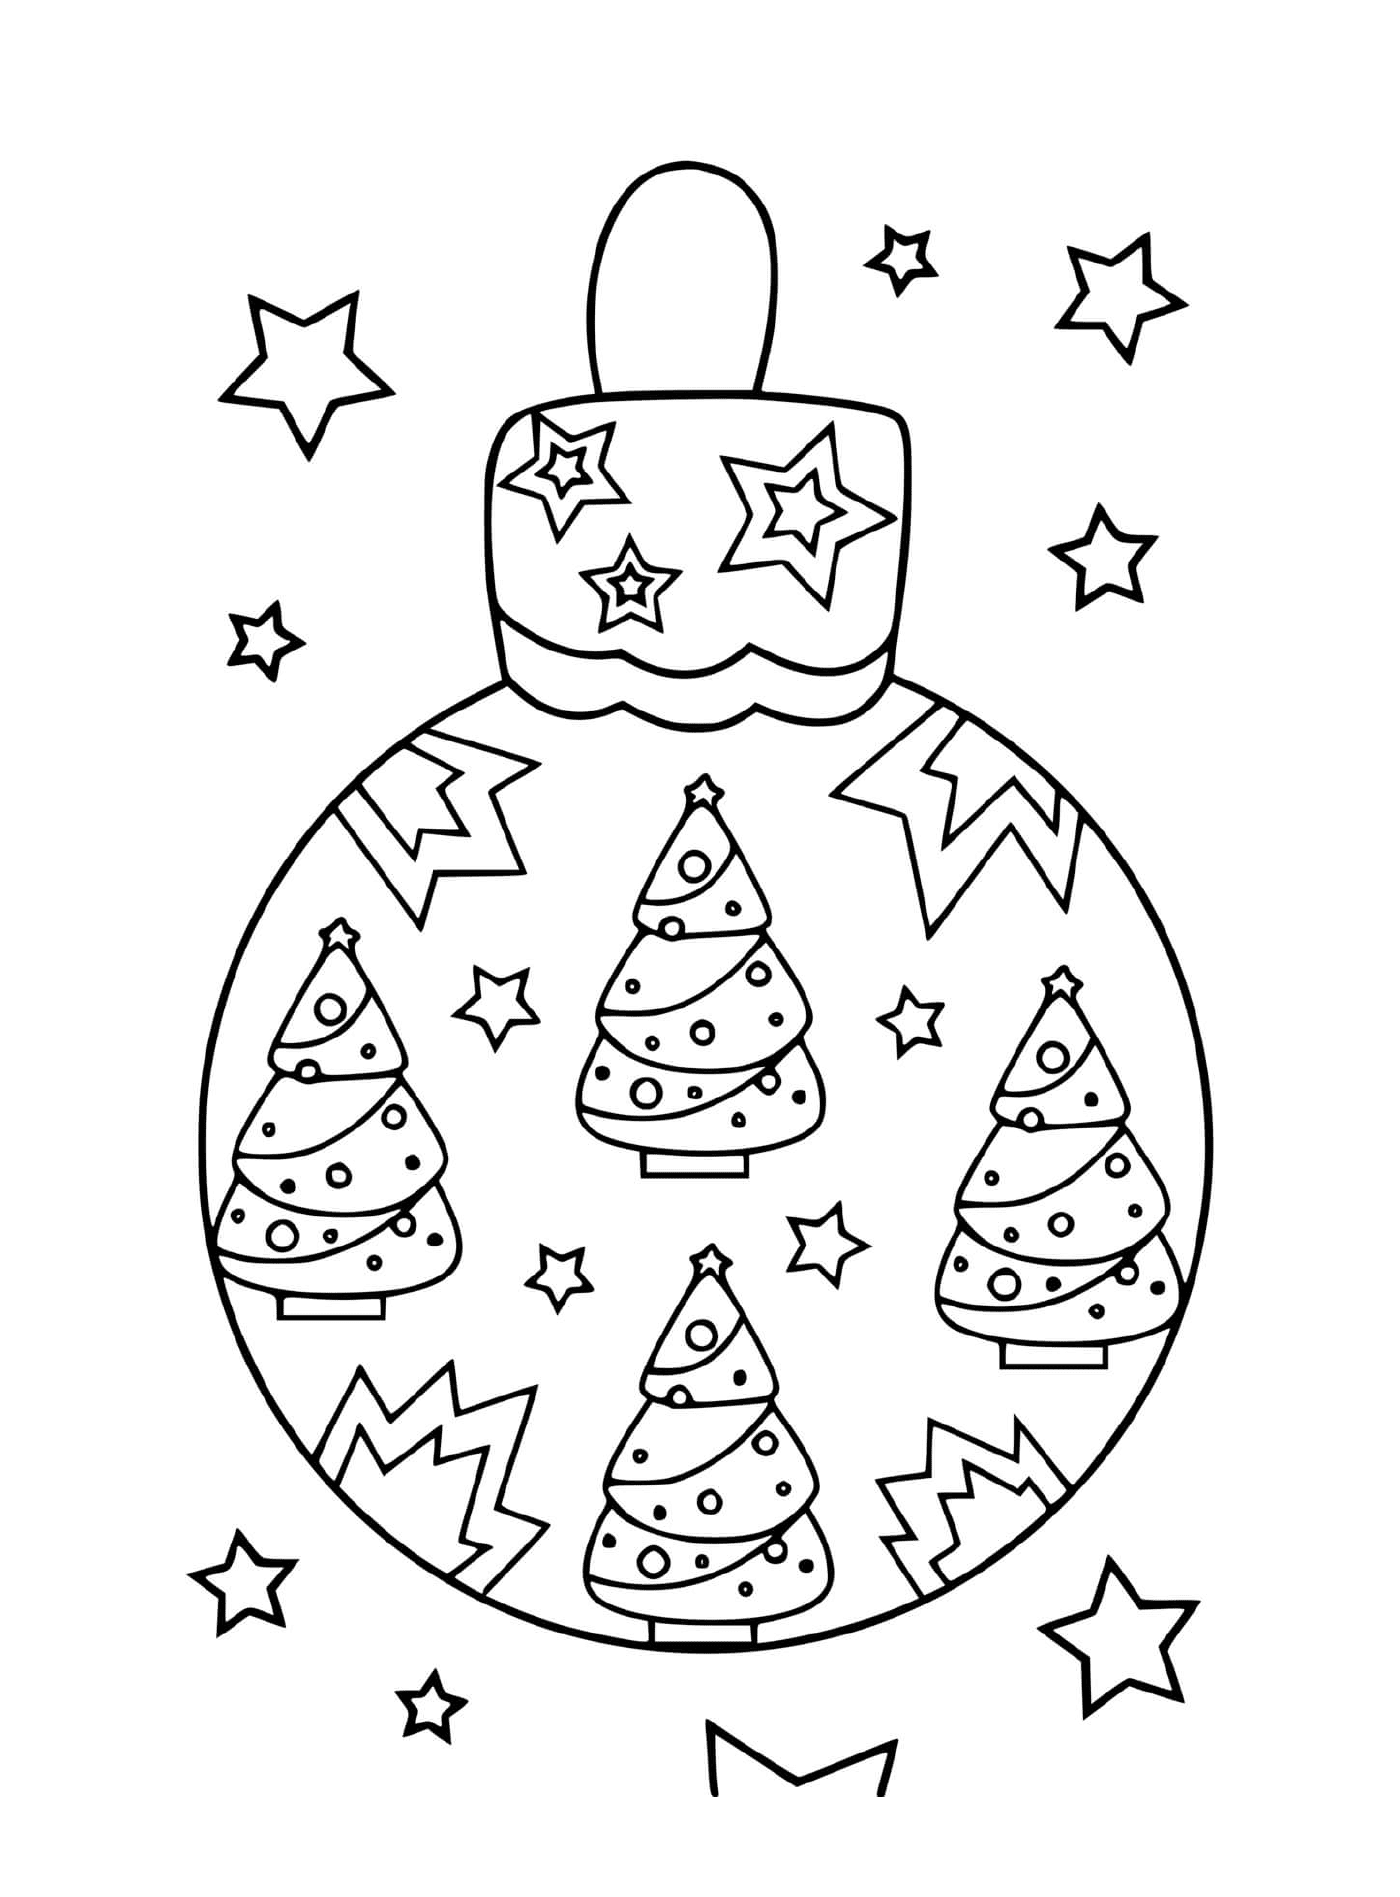  A Christmas ball with fir trees and stars 